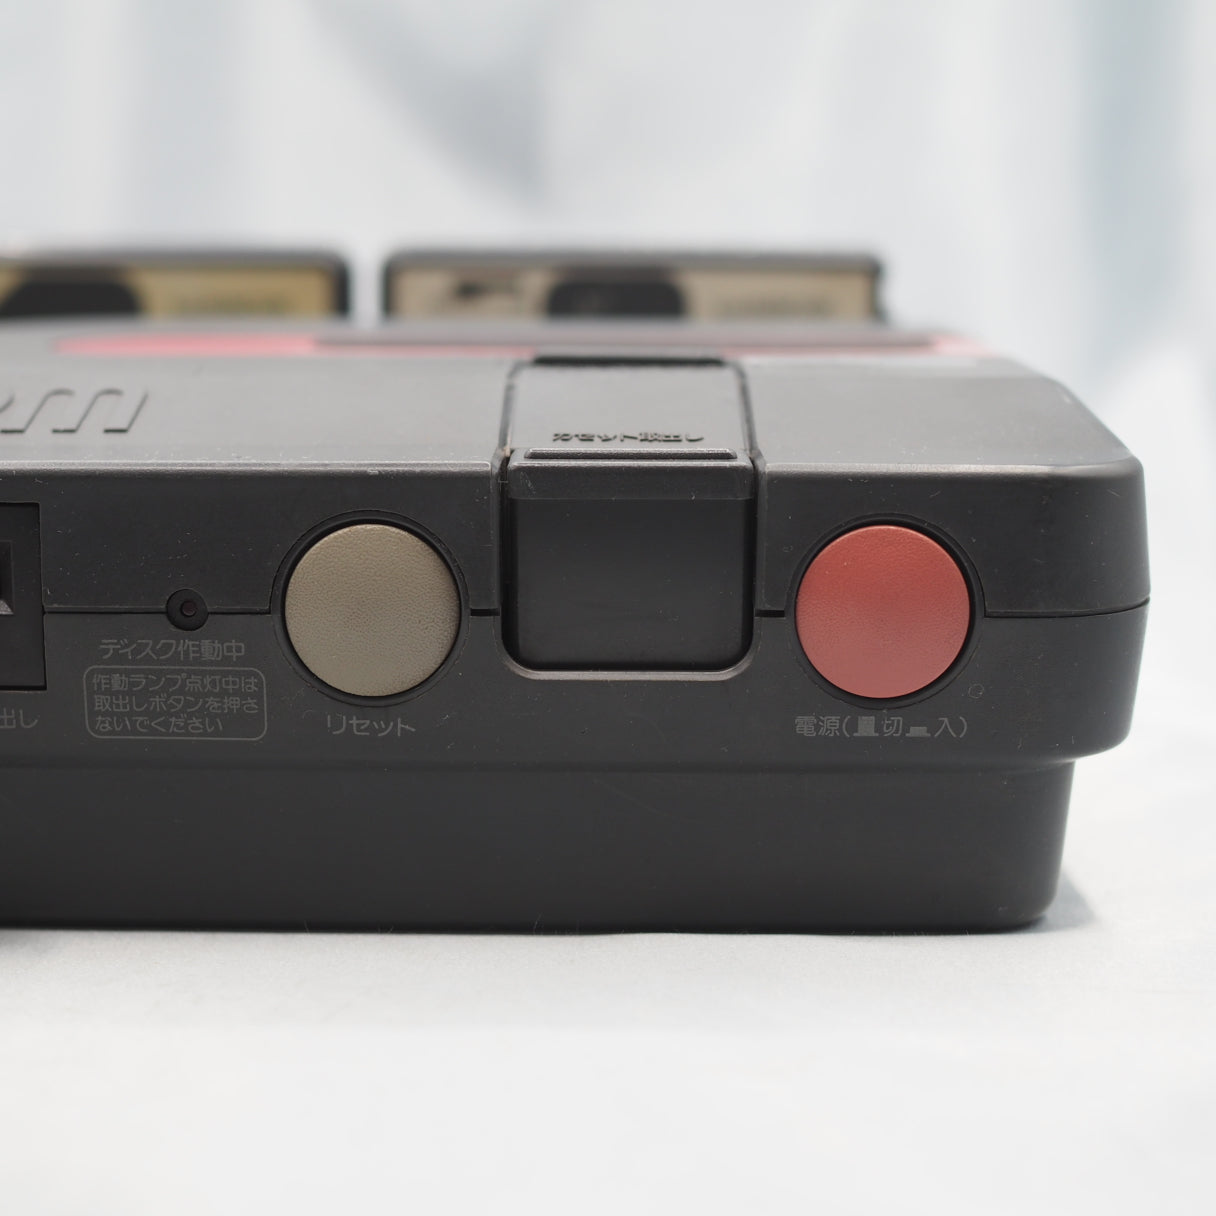 Twin Famicom AN-500B [New Rubber Belt replaced] No.2